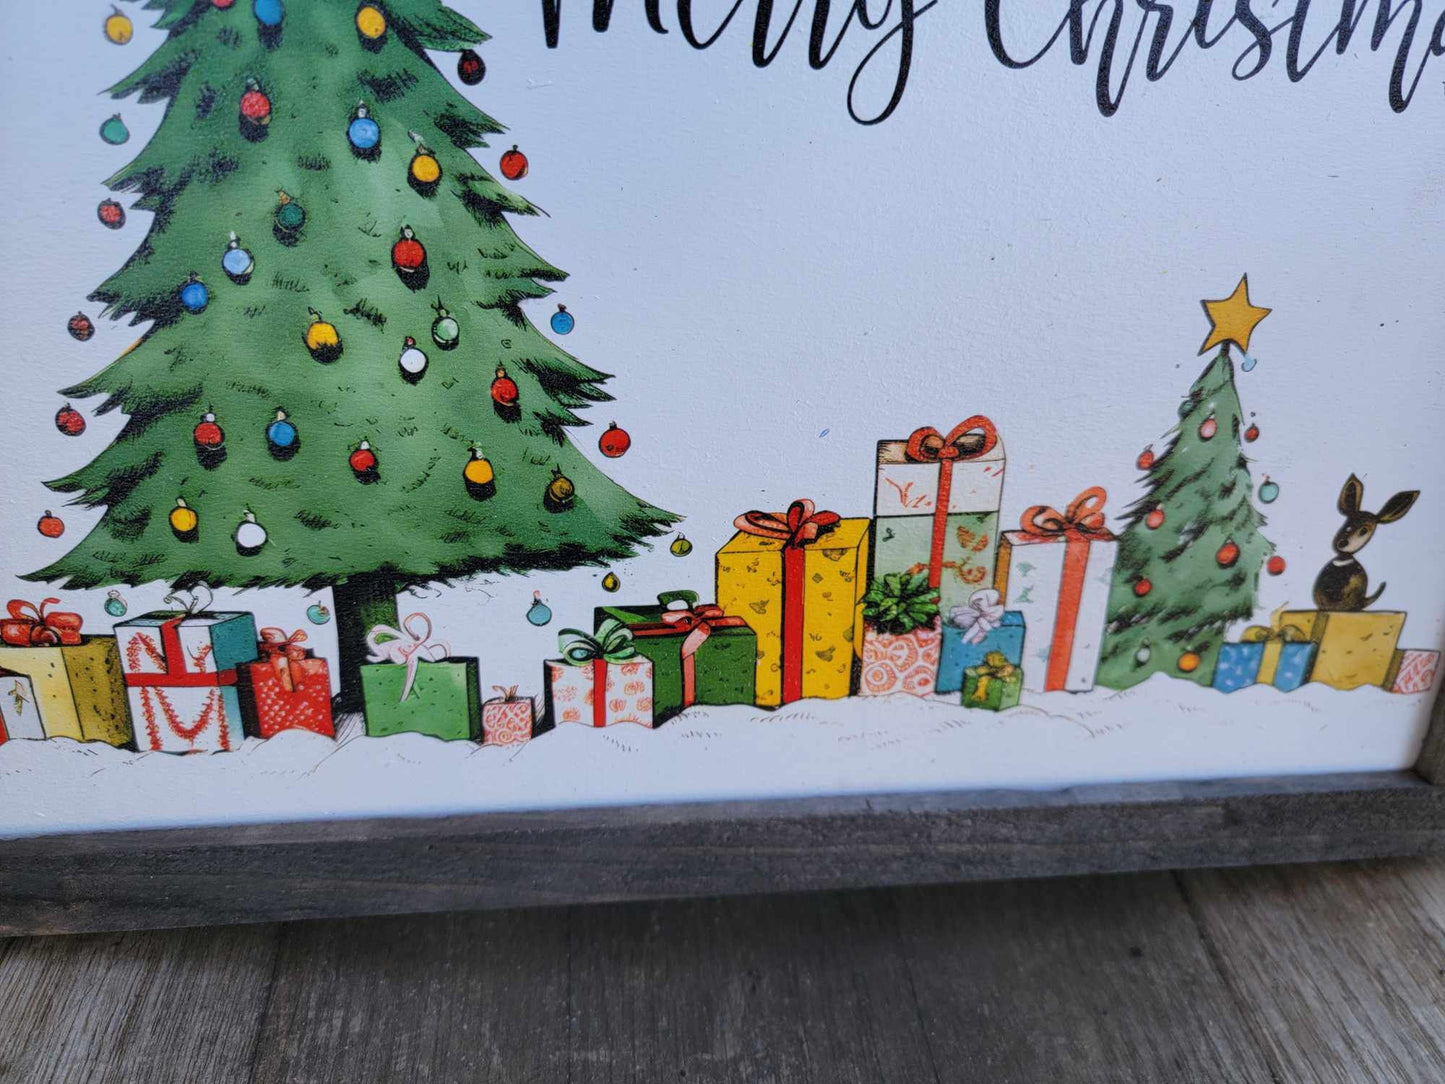 Winky Circleville Ohio Christmas Tree Winter Mascot Tree Top Presents 43113 Handmade Printed Color Rustic Framed Wall Art Decor